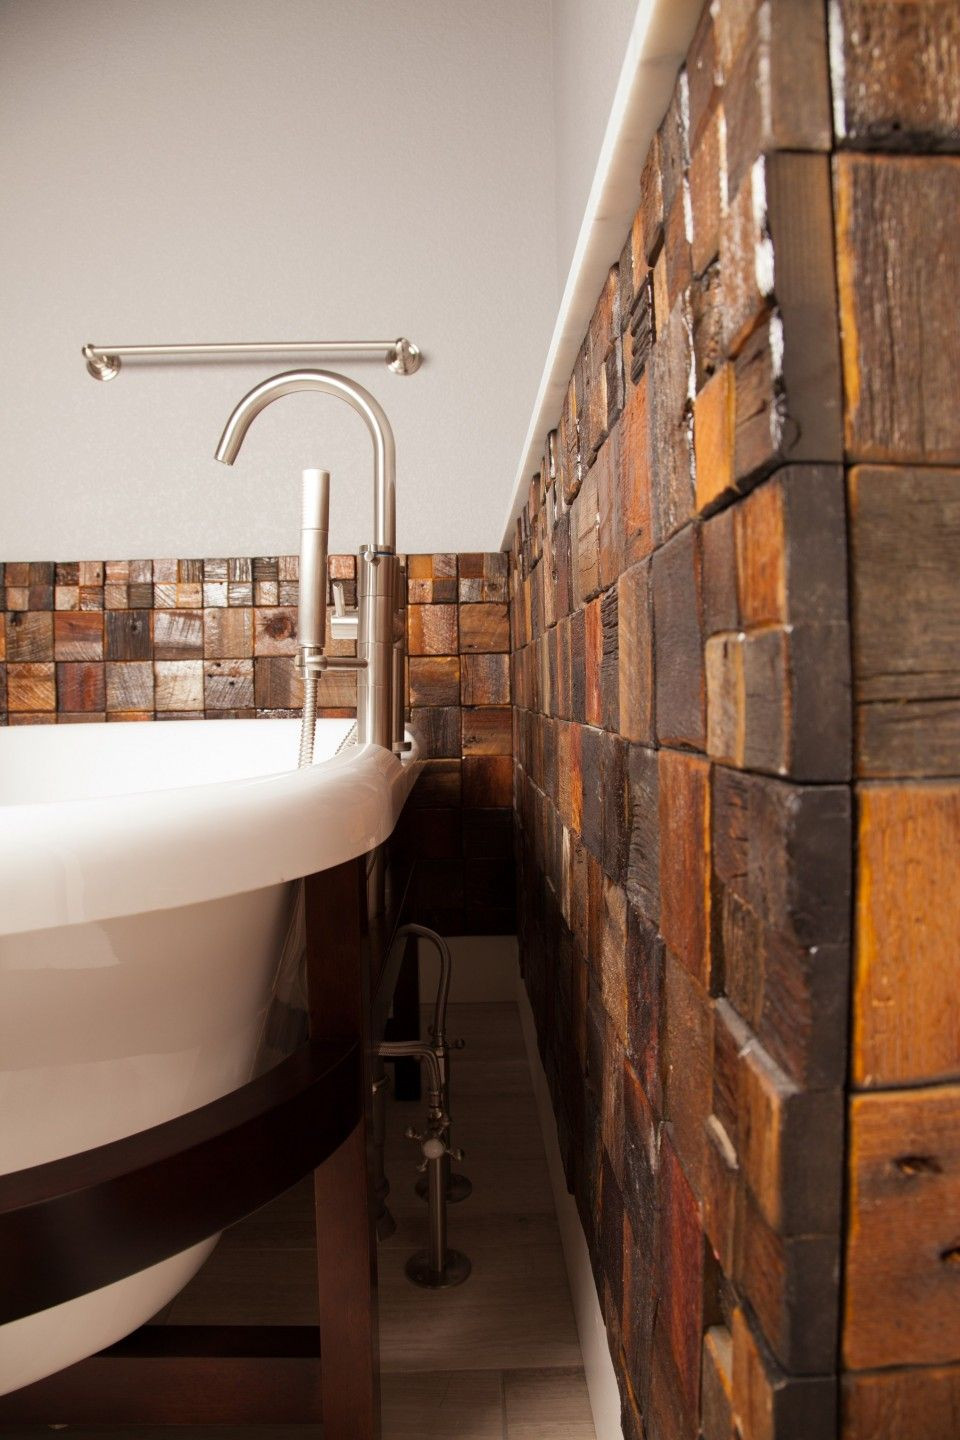 Barnwood Tile Bathroom
 Reclaimed Barnwood used as a backsplash for a free